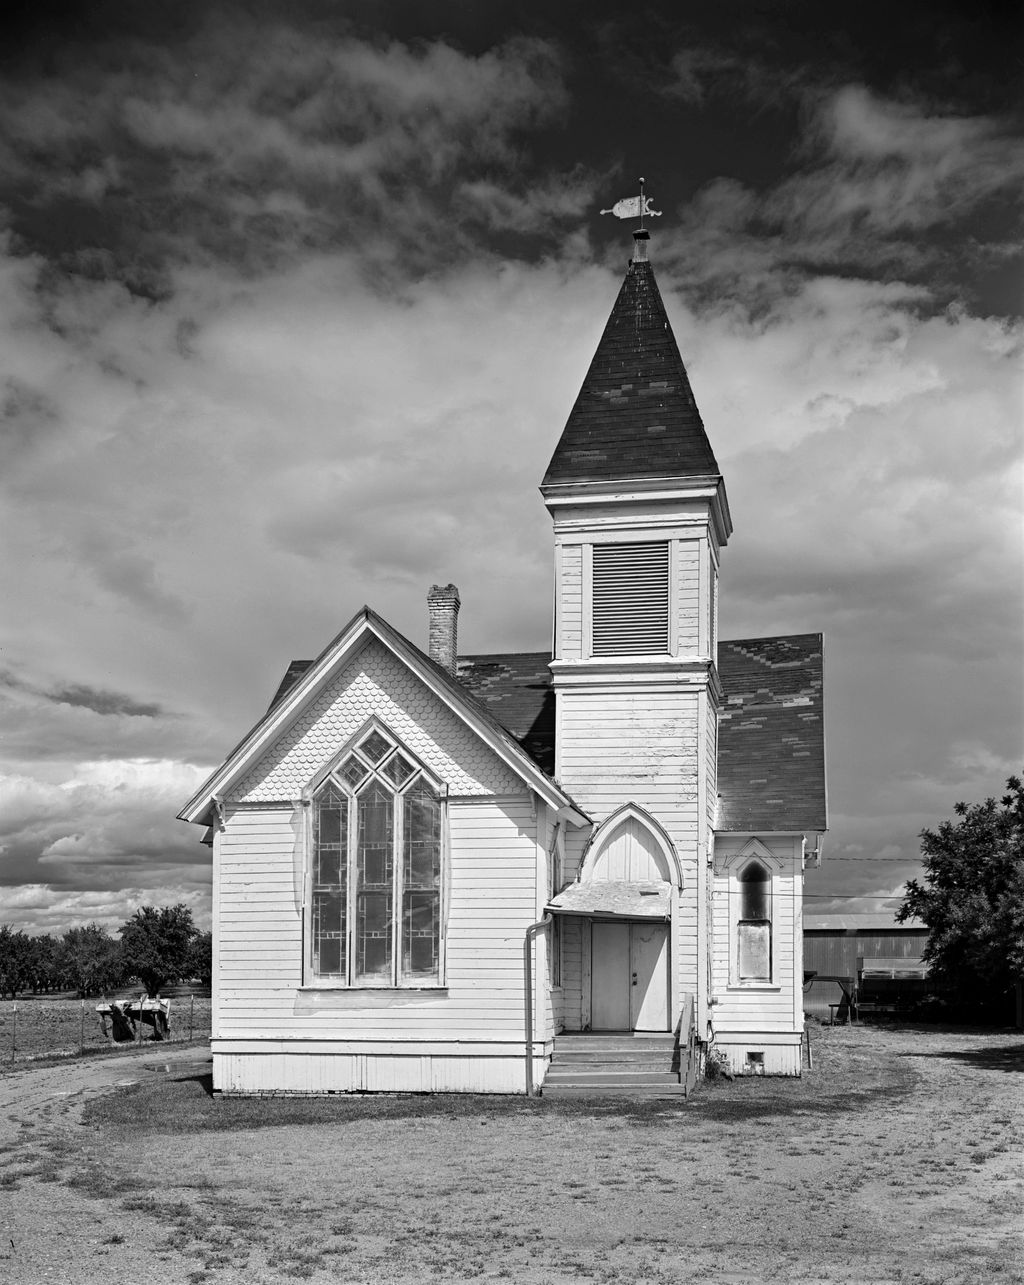 Dunnigan Community Church